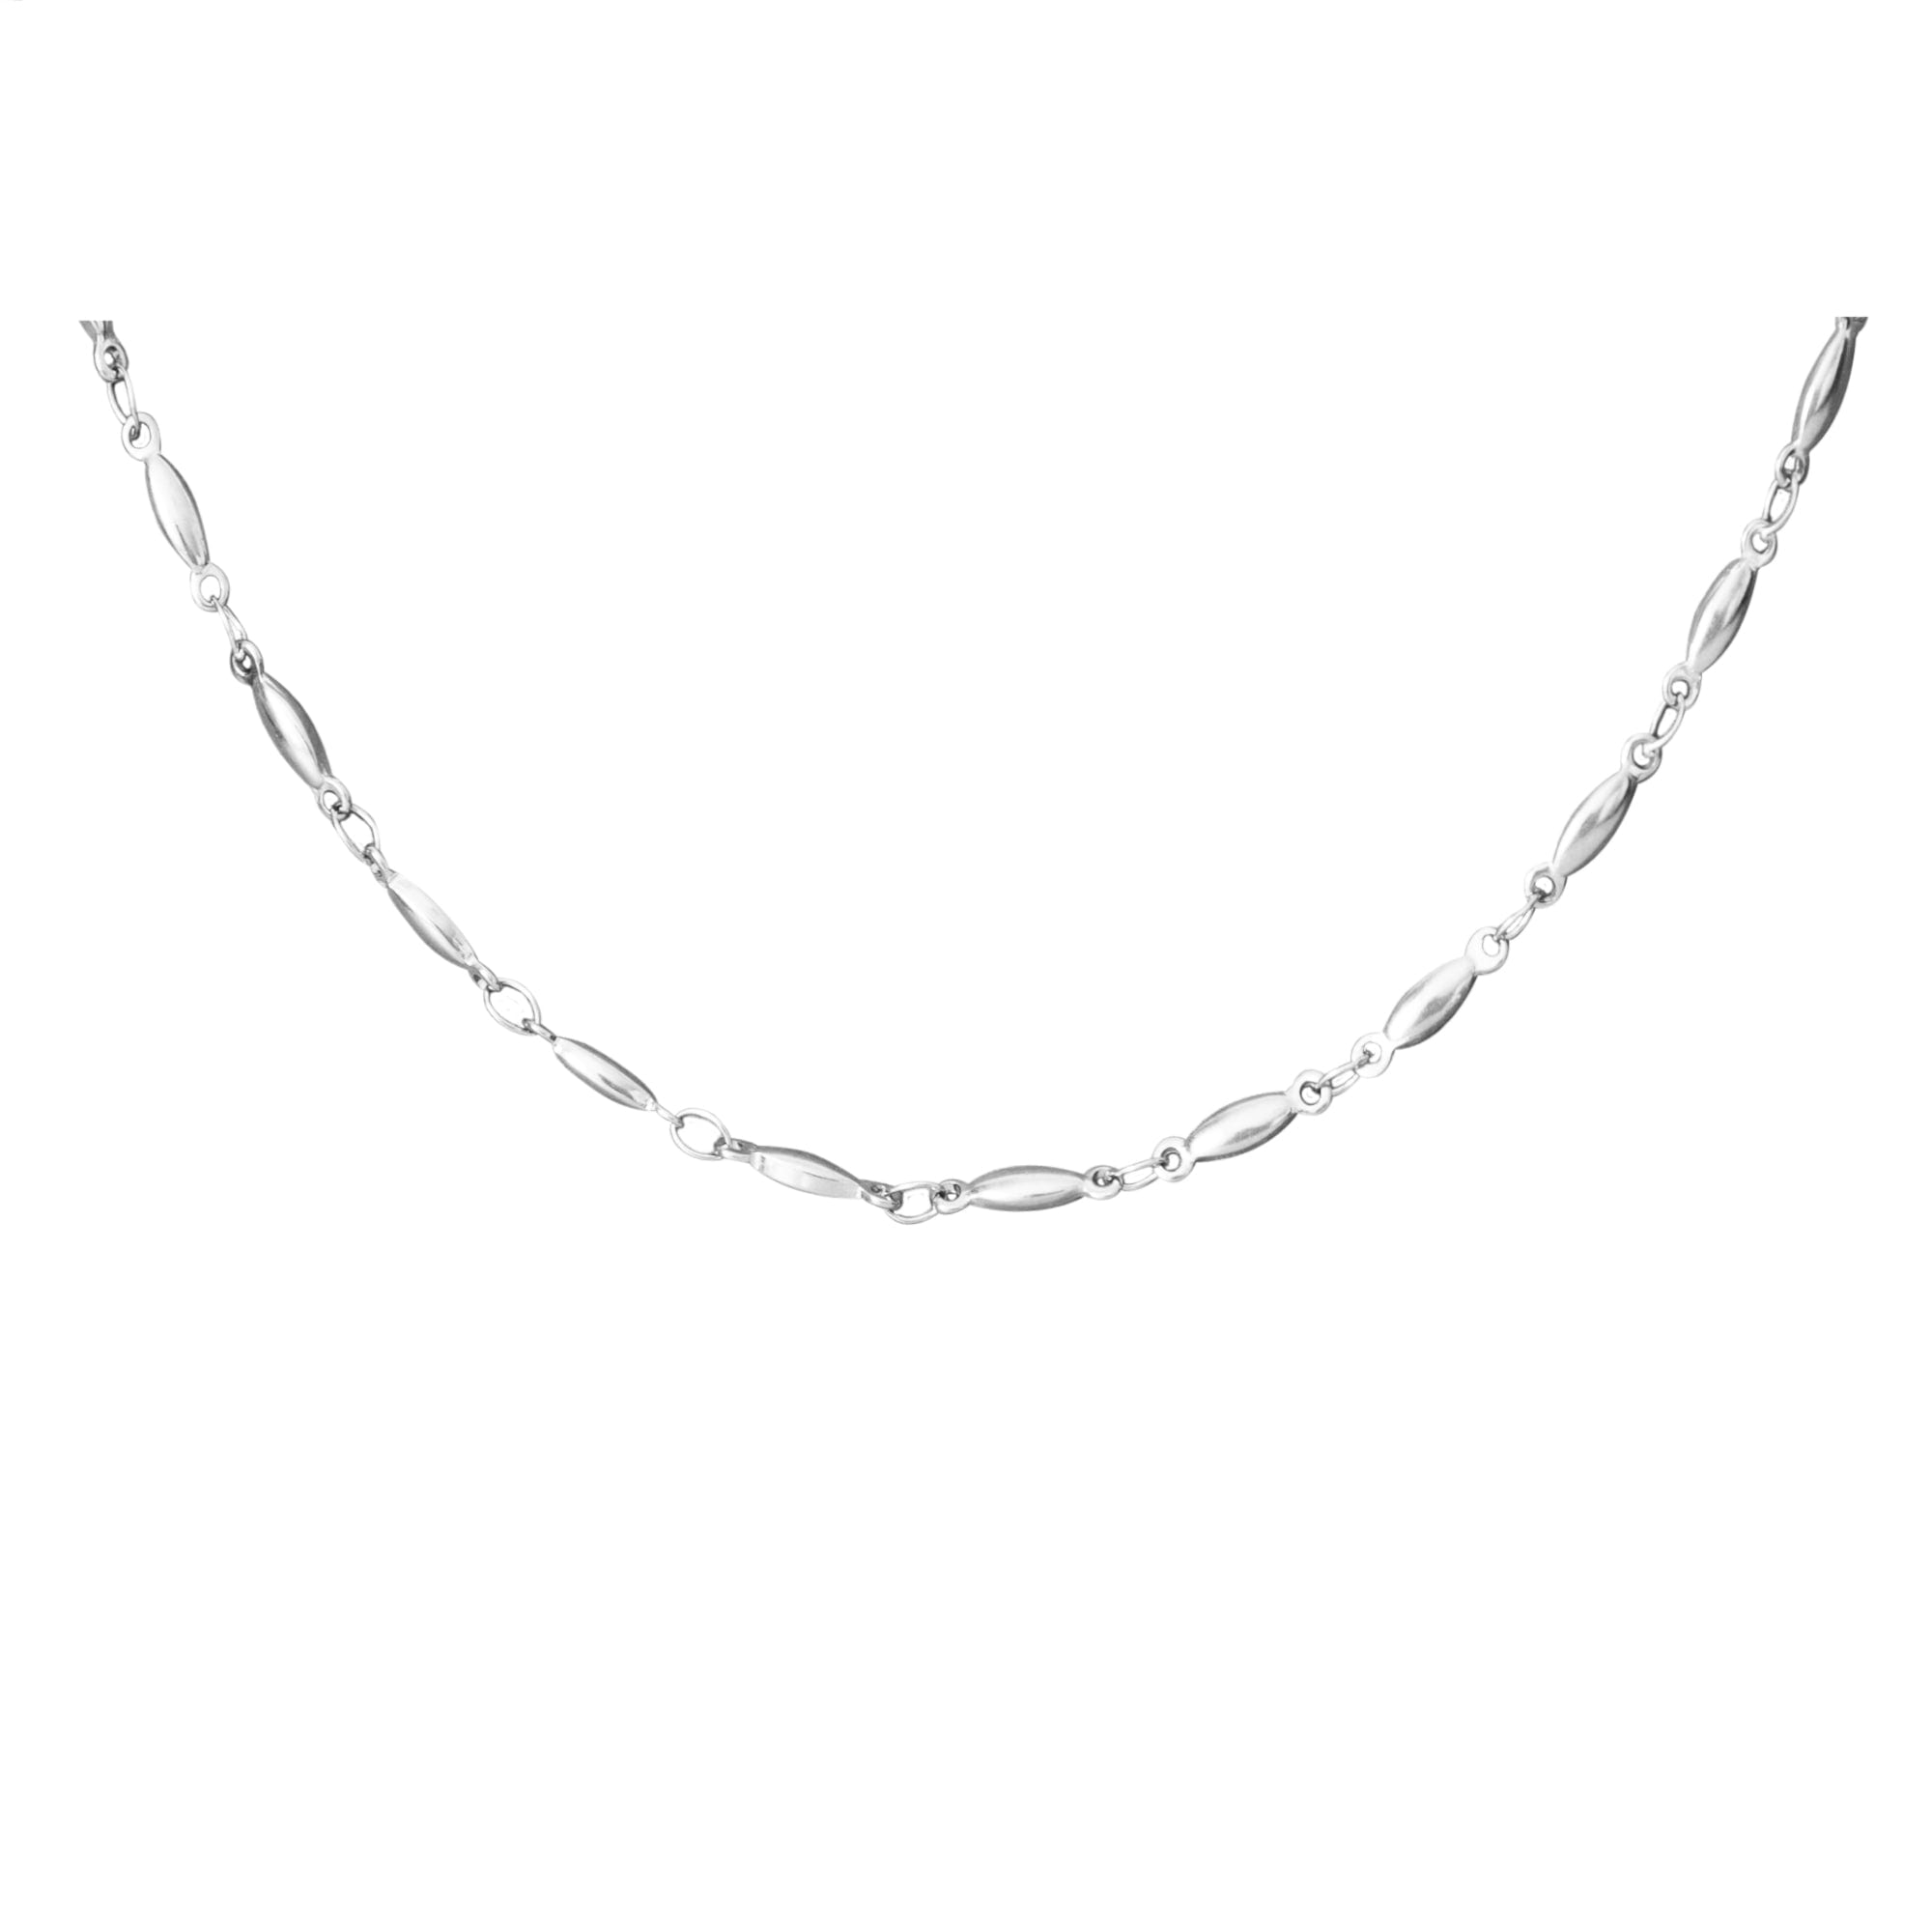 Stainless steel chain - Samirah